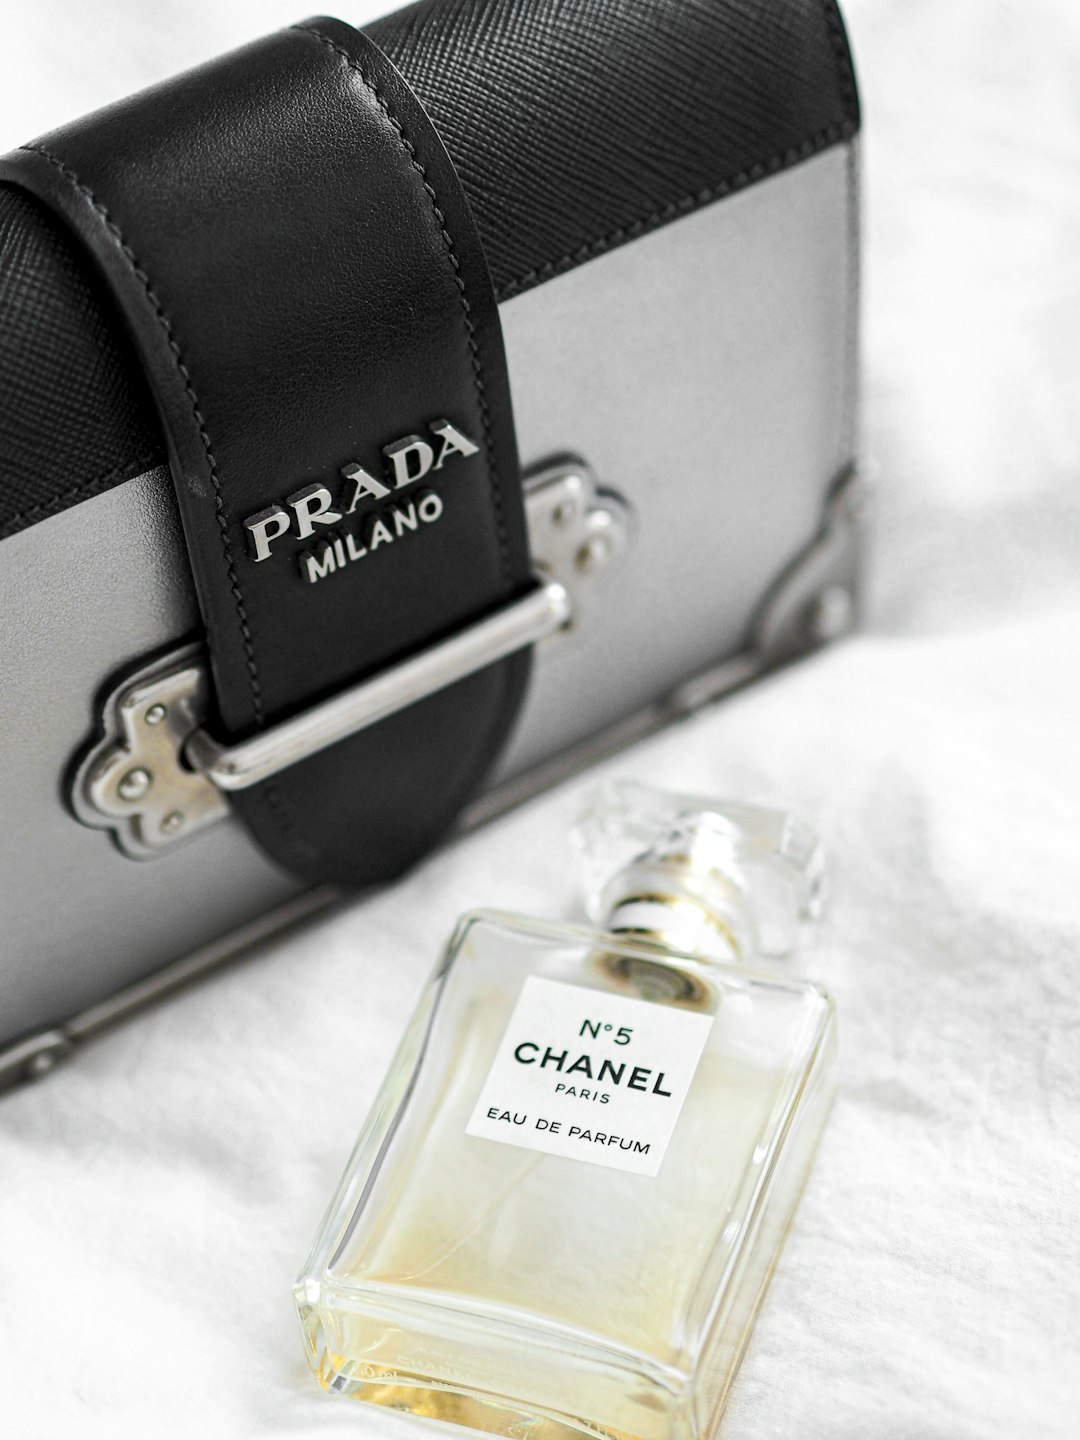 clear glass perfume bottle beside black leather bag